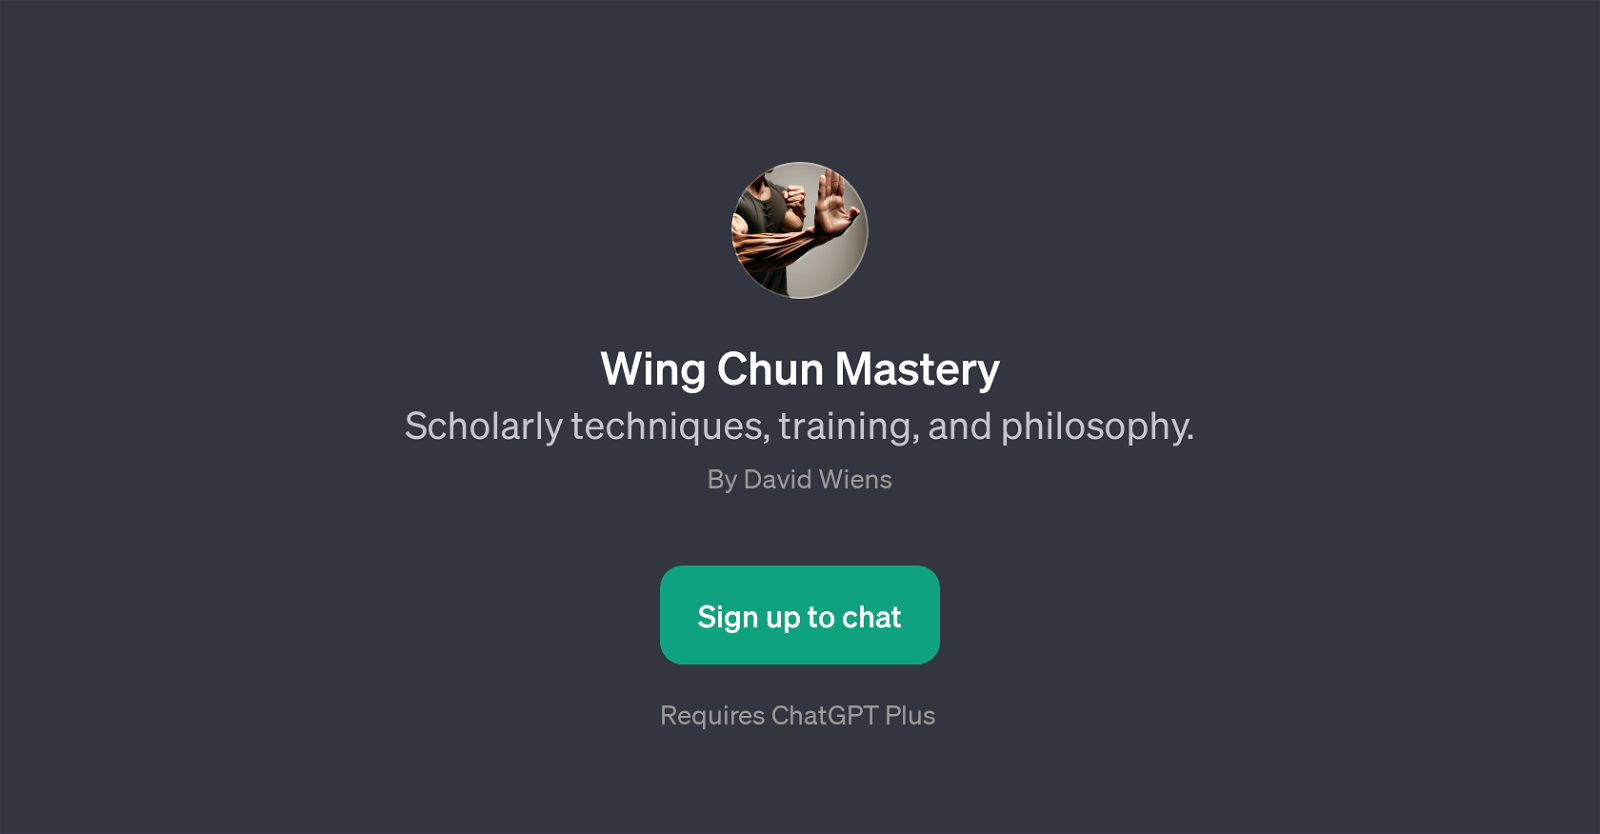 Wing Chun Mastery website